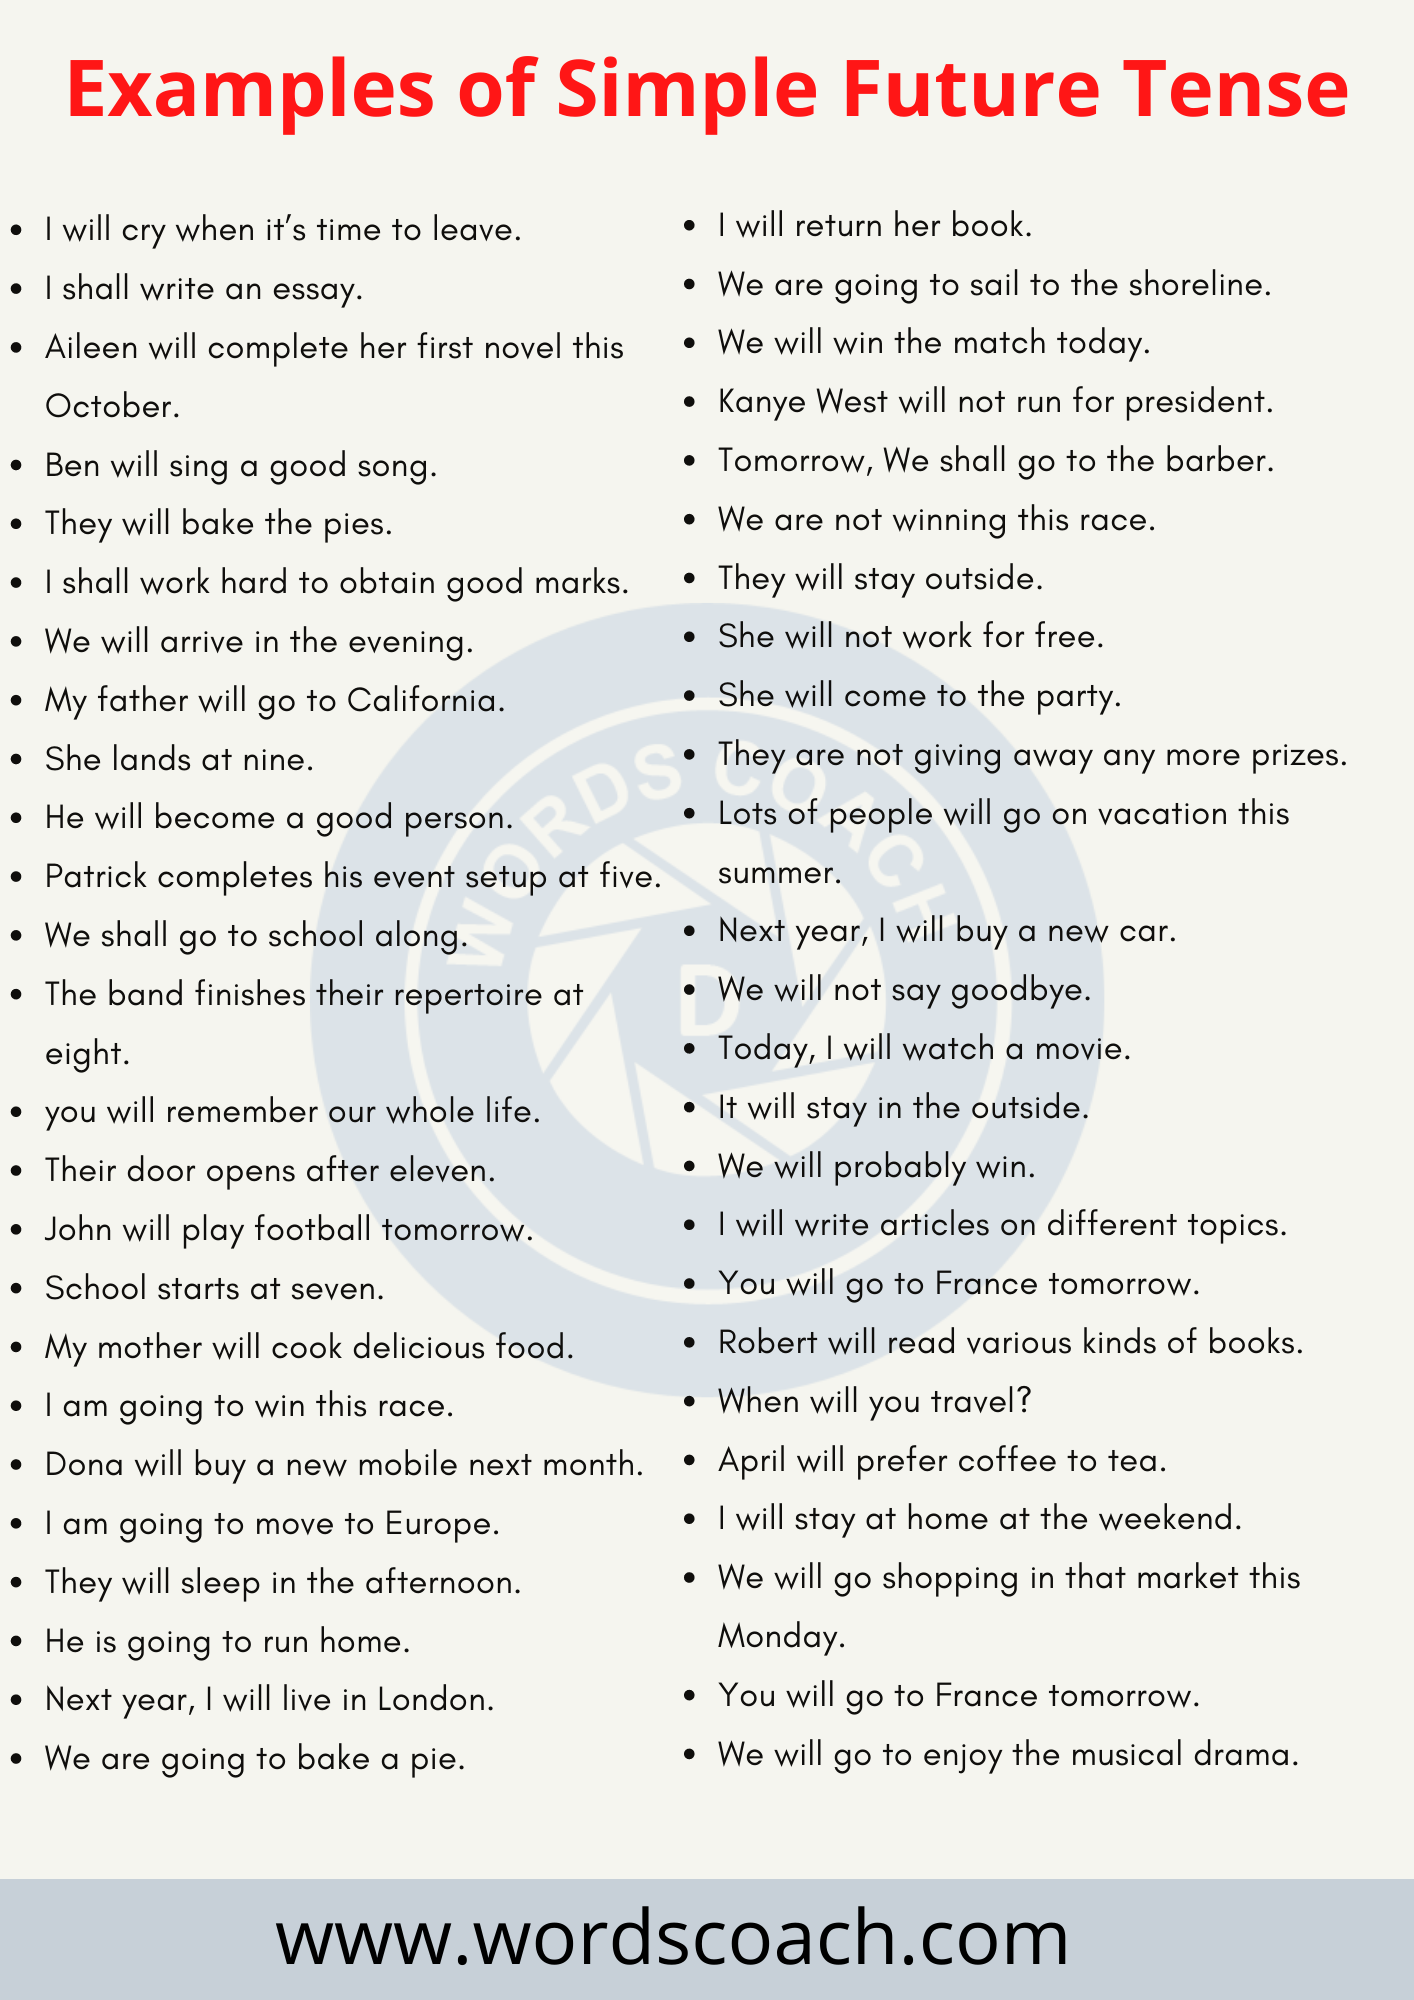 Examples of Simple Future Tense Sentences - wordscoach.com